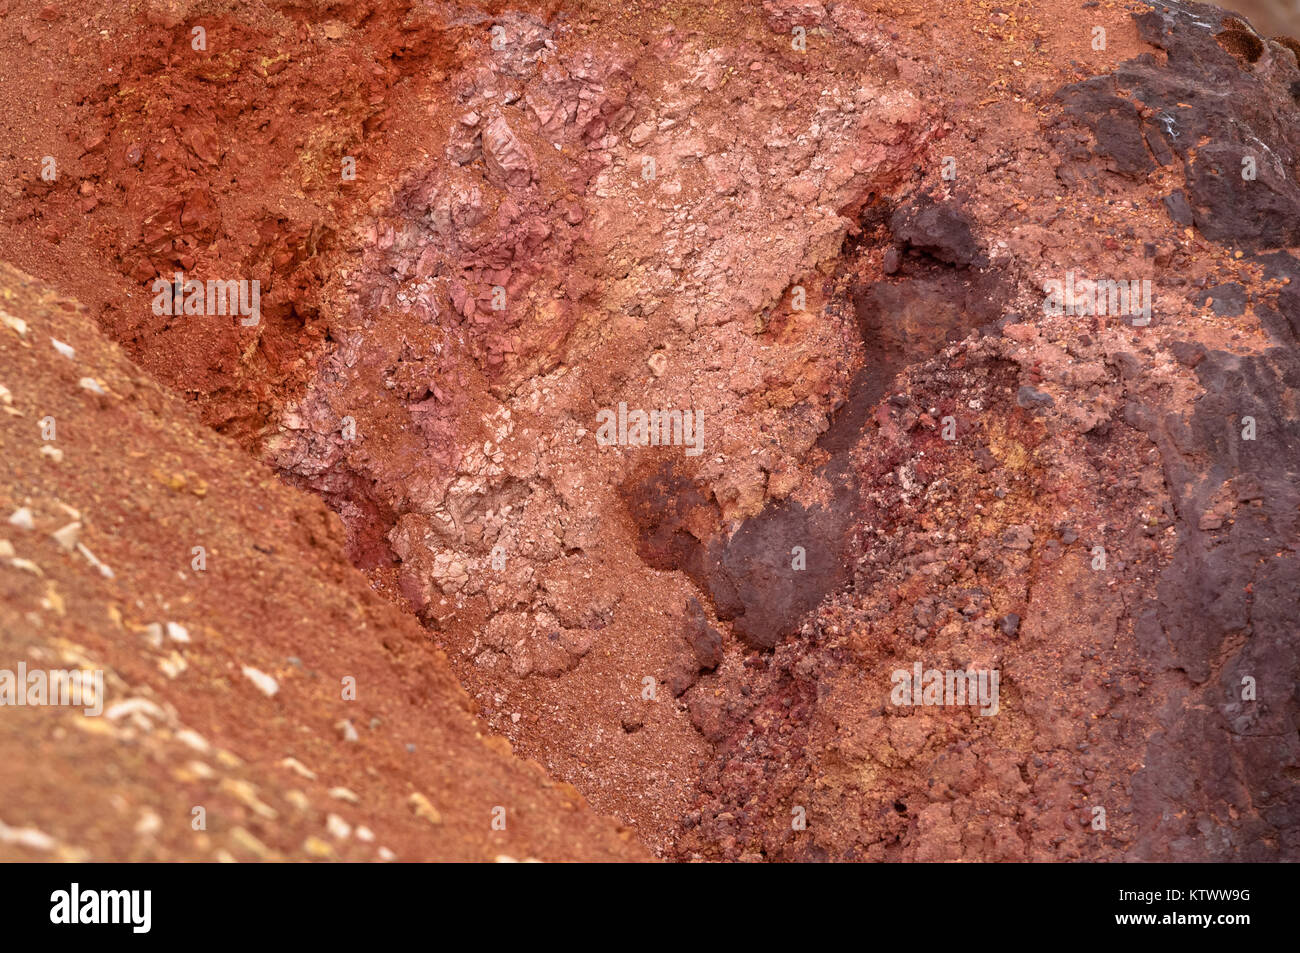 Bauxite mine, raw weathered bauxite sedimentary rock on surface Stock Photo